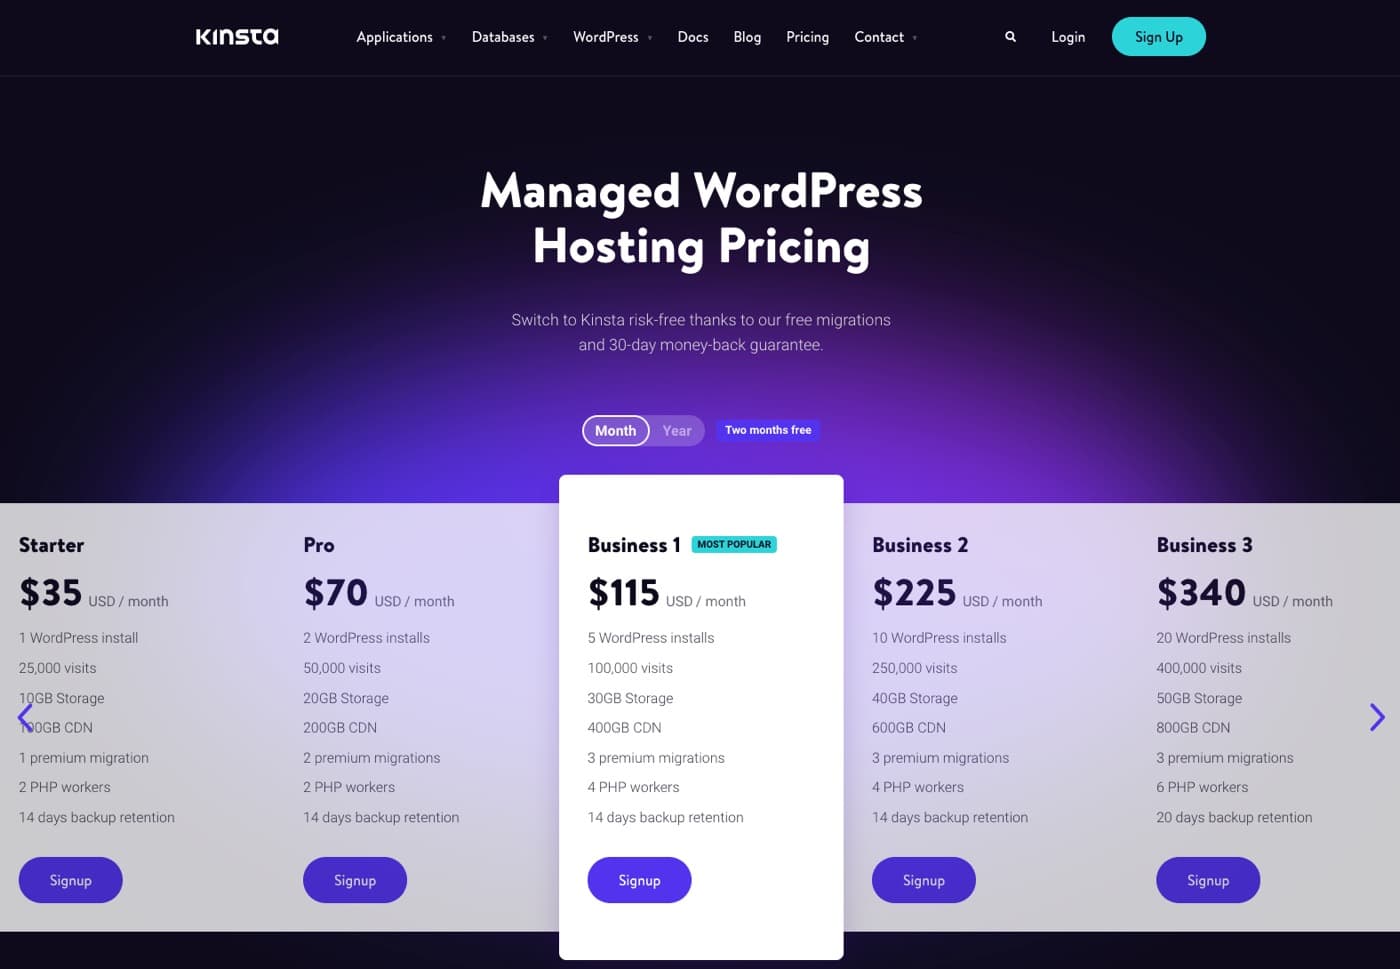 Kinsta Managed WordPress Hosting Pricing page.